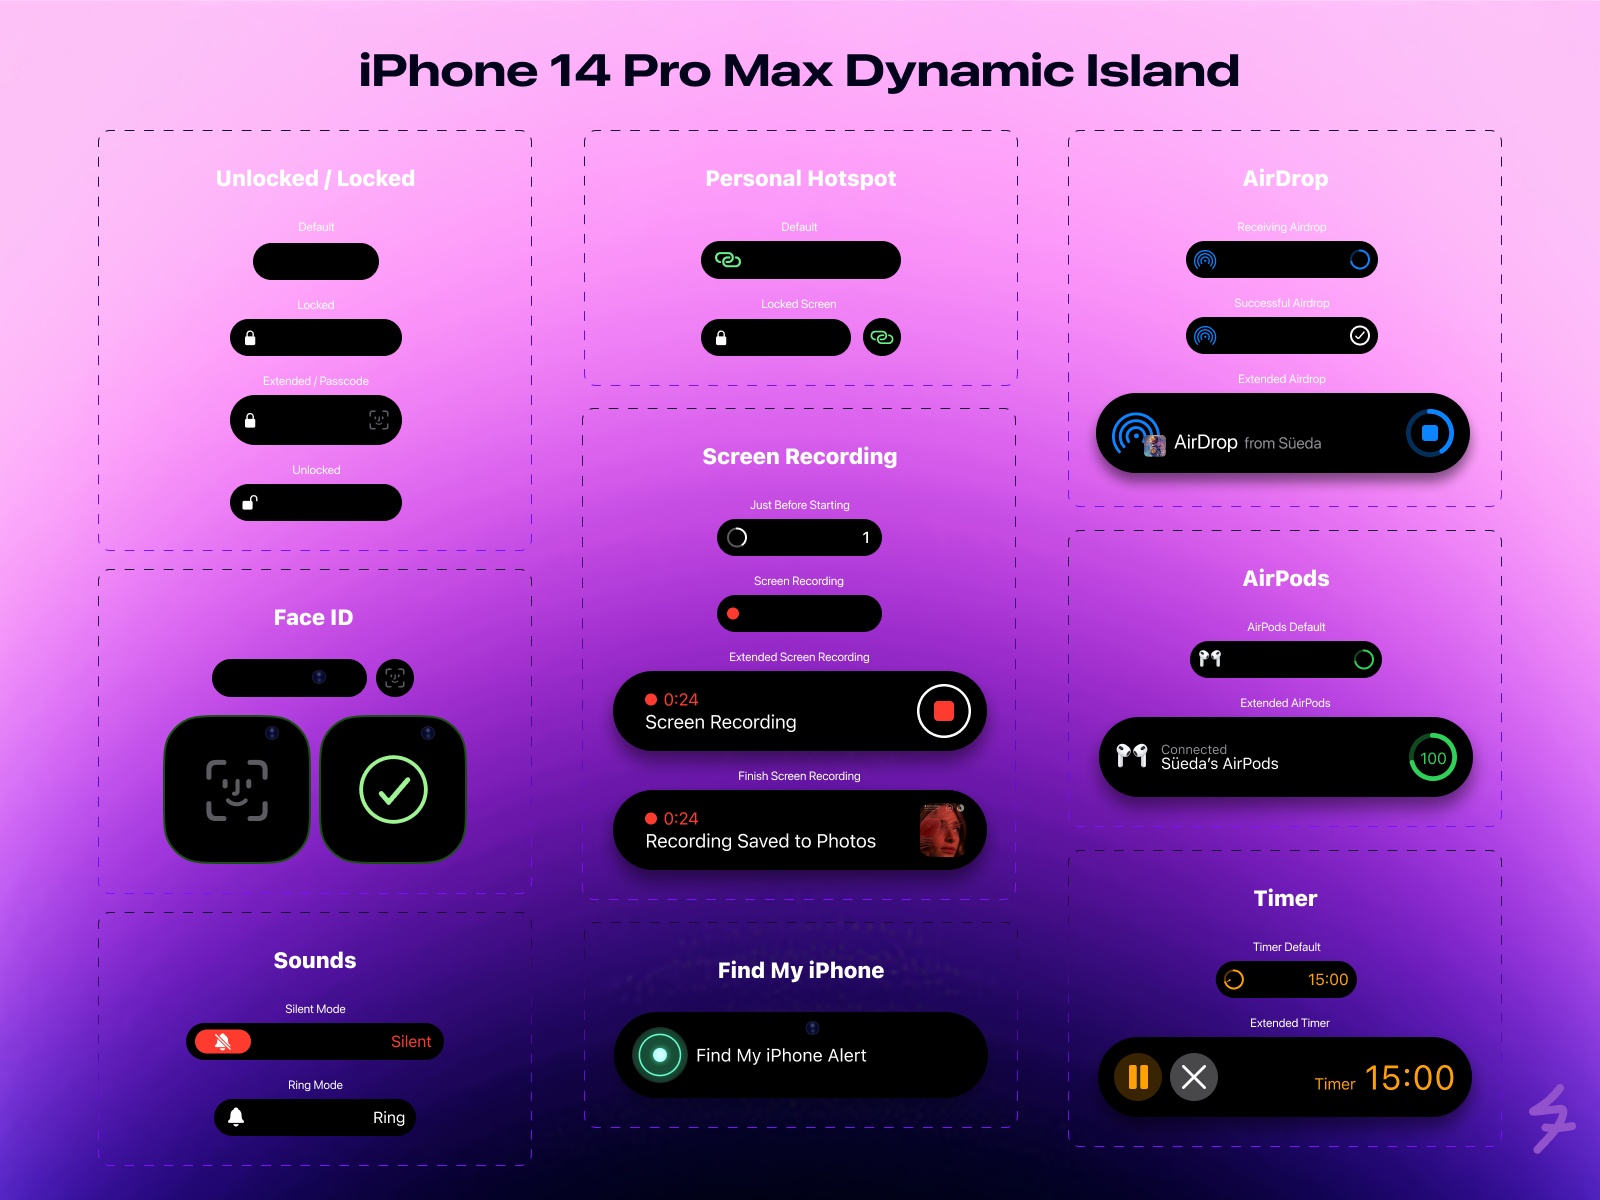 Обои для iphone 14 Pro для Dynamic Island. Обои для динамик Айленд. Обои с Dynamic Island iphone. Iphone 15 Pro Dynamic Island. Dynamic max